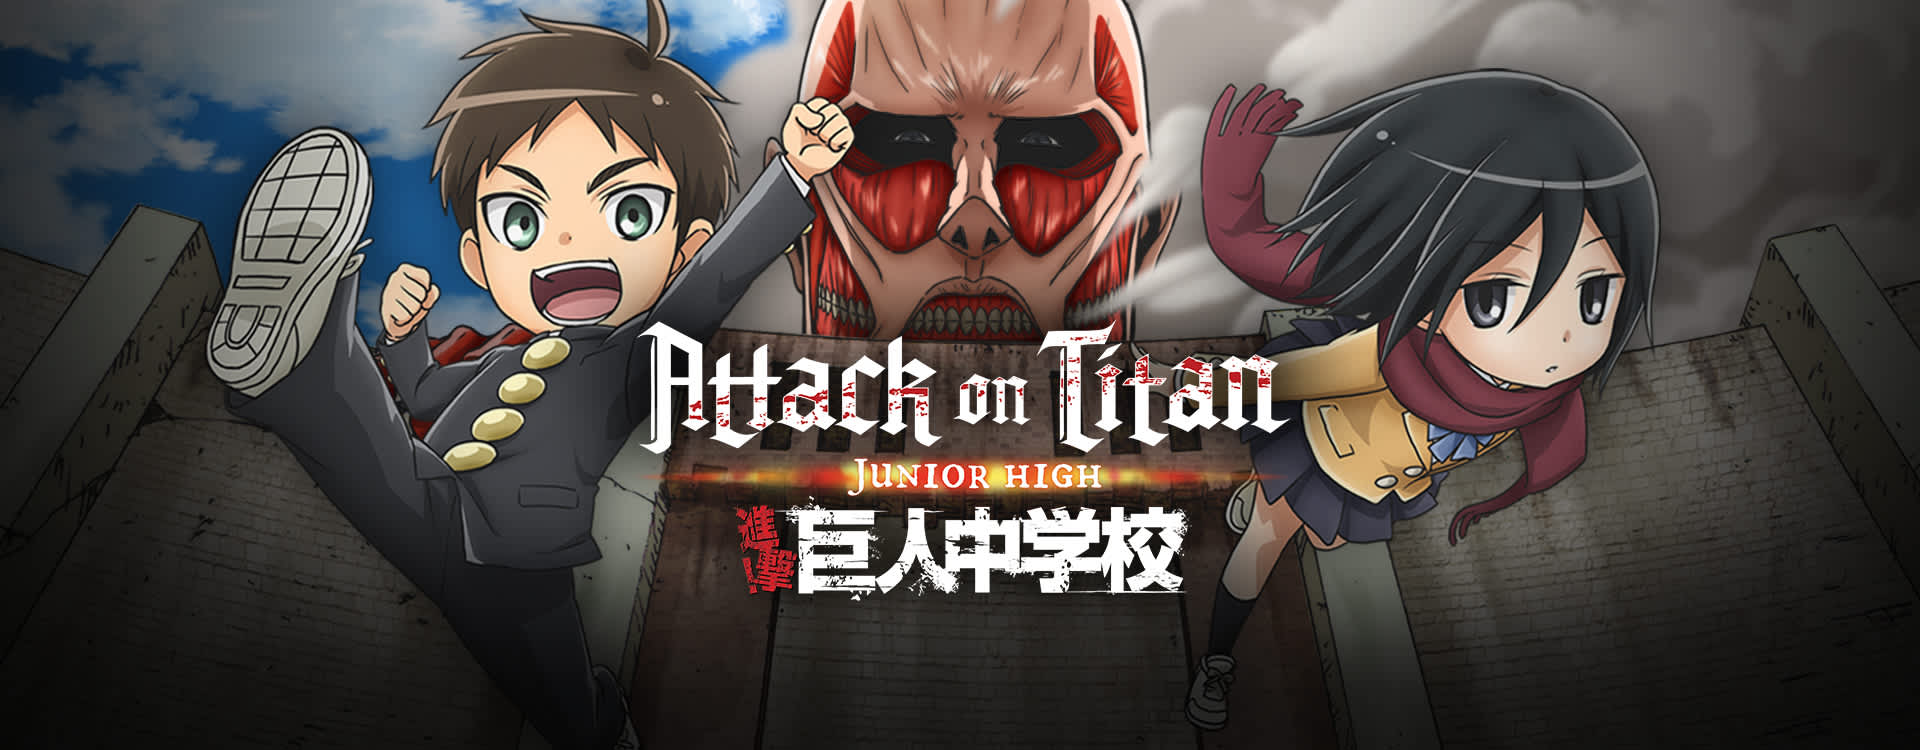 attack on titan english dub free watch